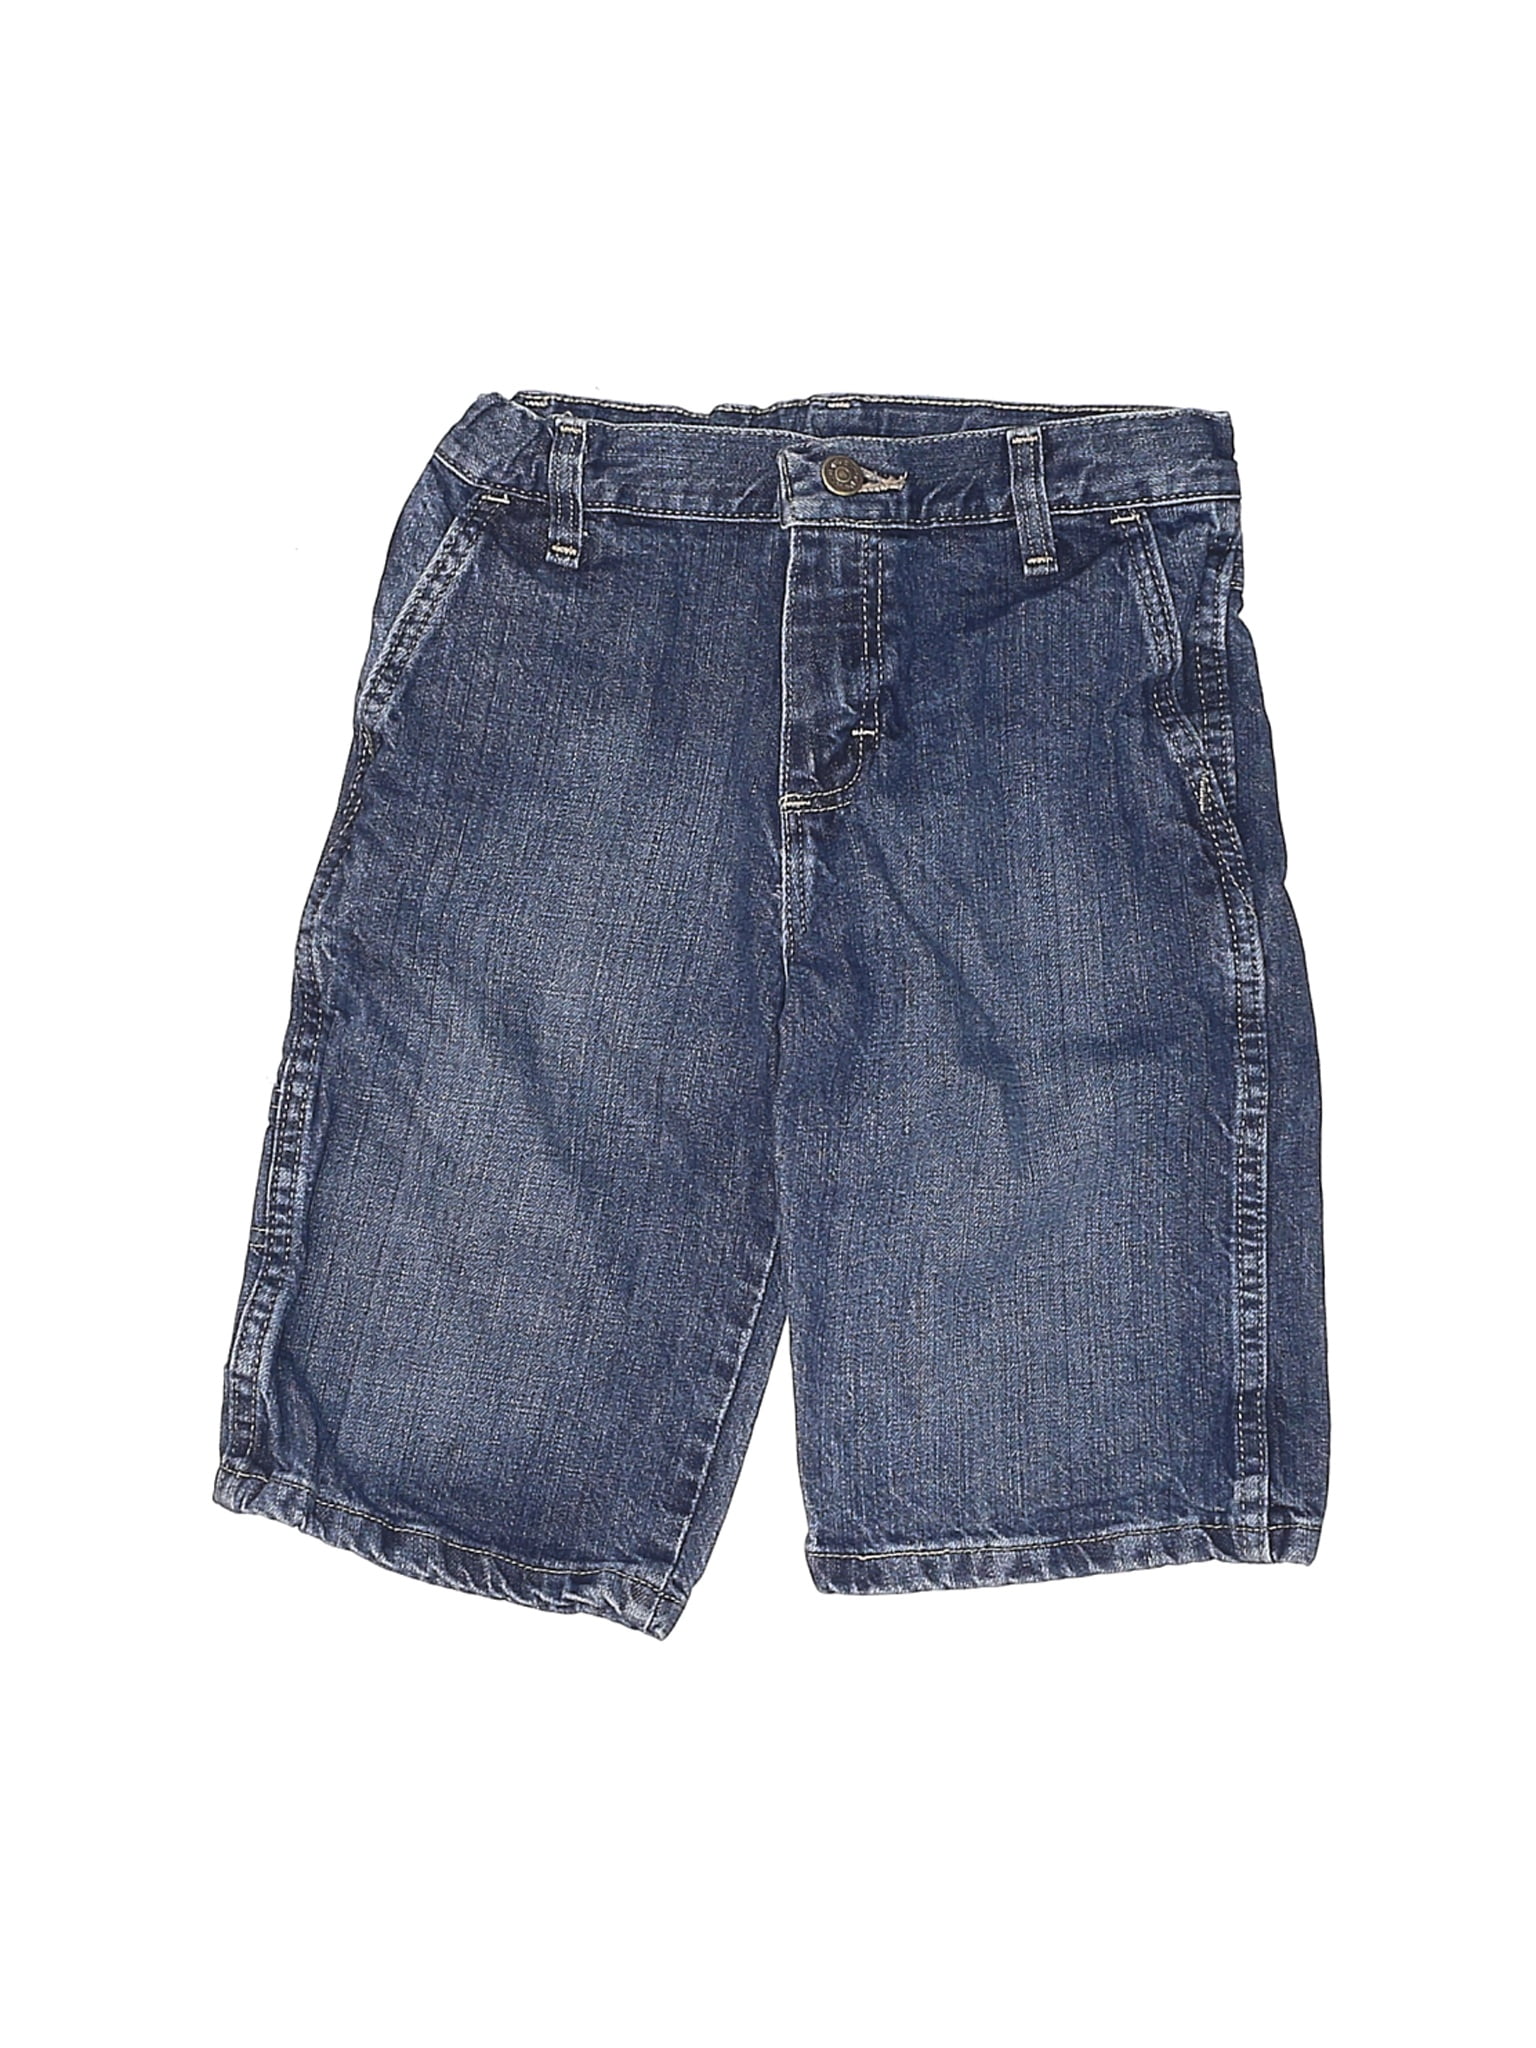 boys jean shorts size 10